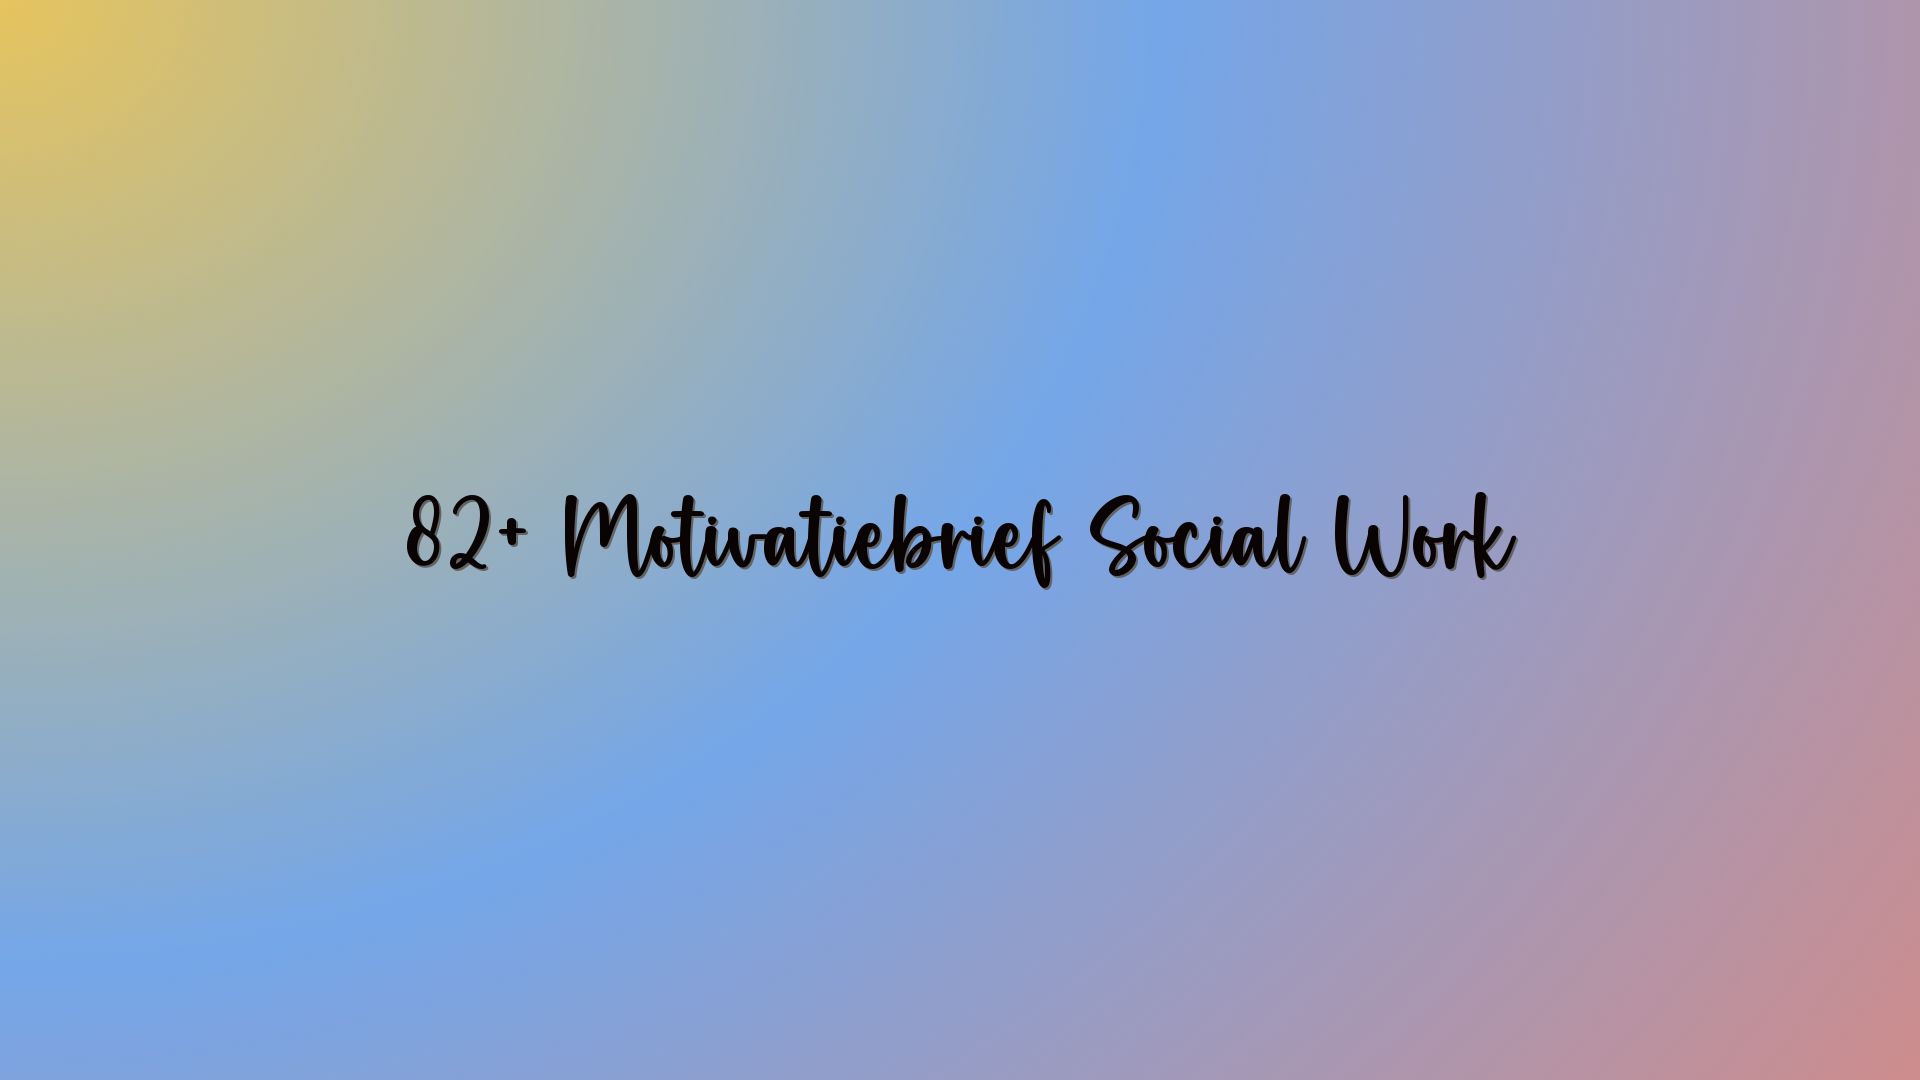 82+ Motivatiebrief Social Work